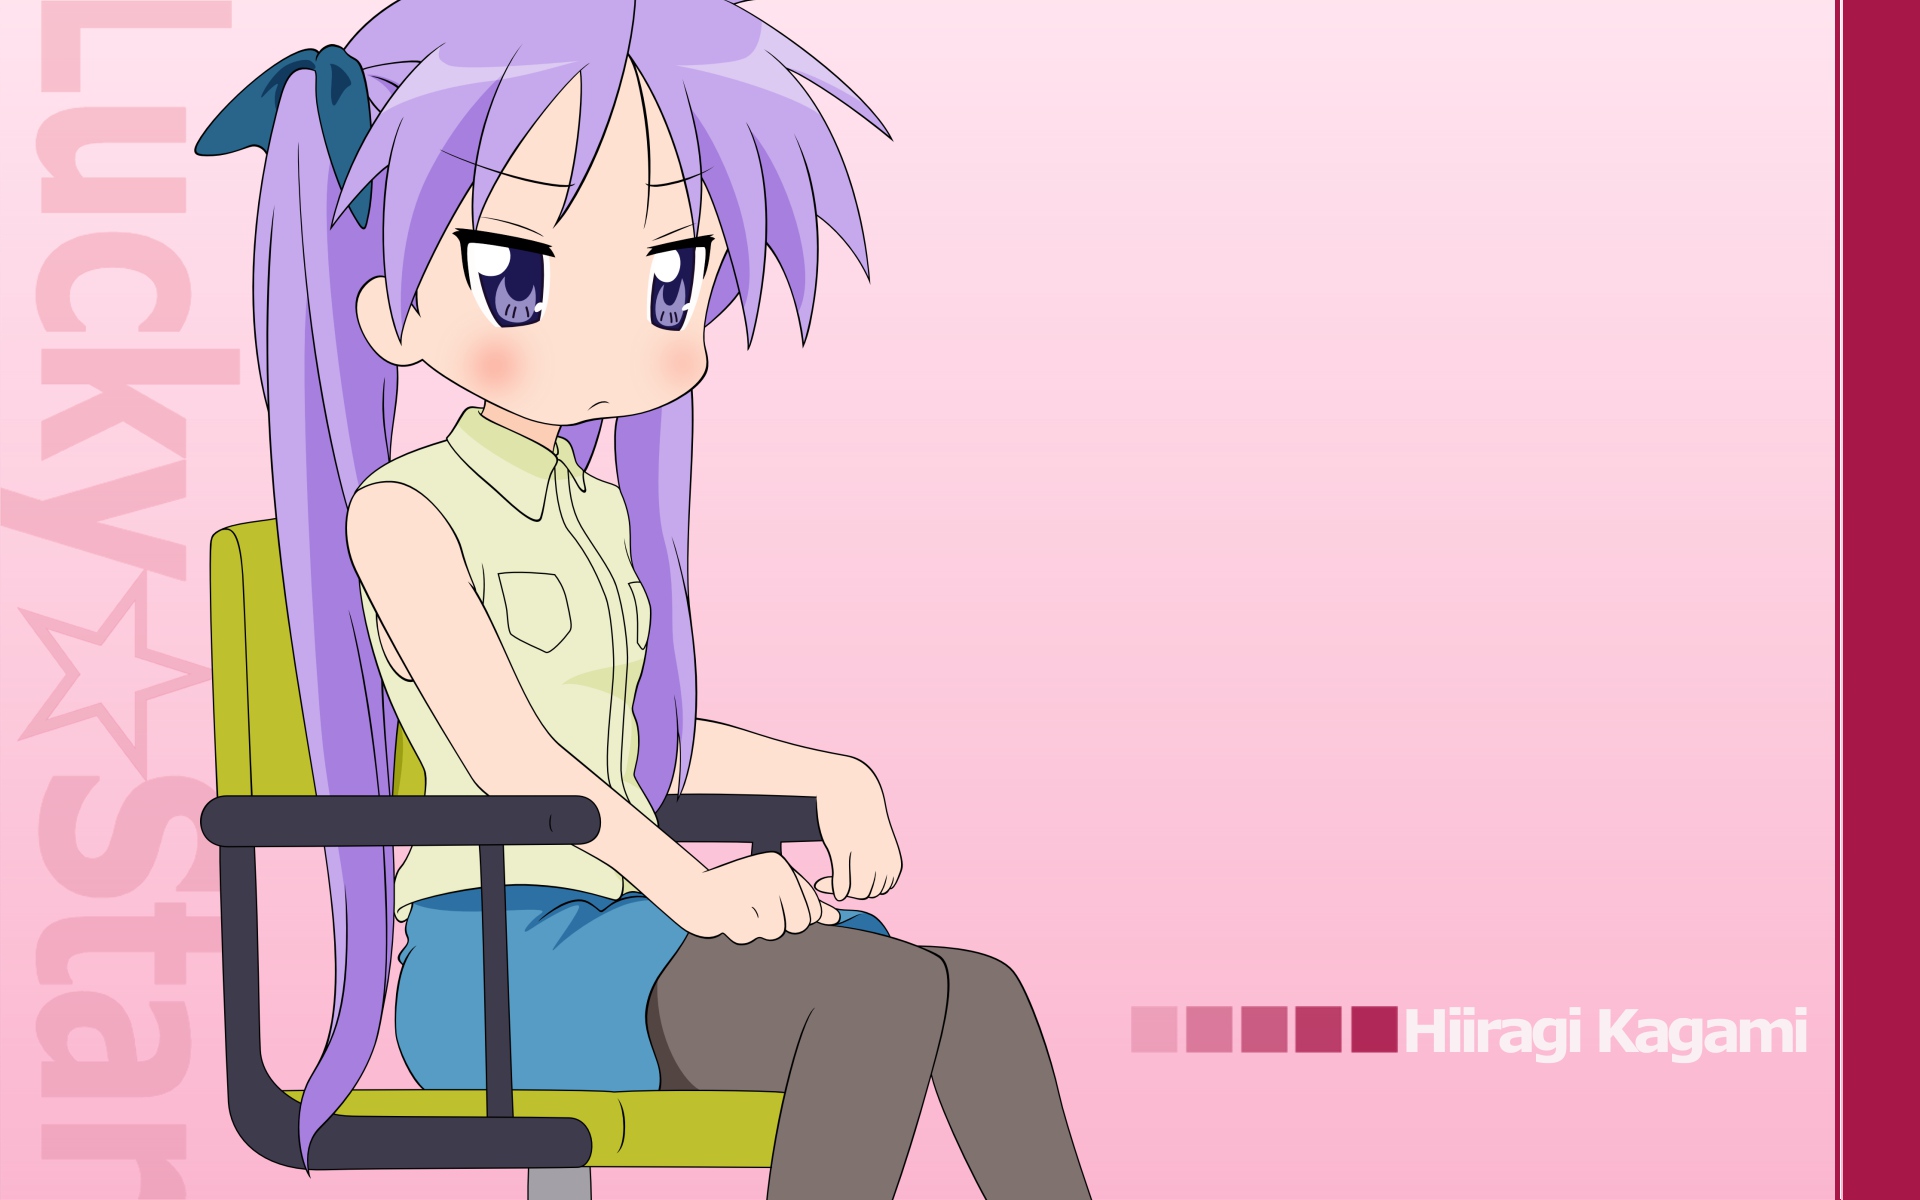 Descarga gratis la imagen Animado, Raki Suta: Lucky Star, Kagami Hiiragi en el escritorio de tu PC